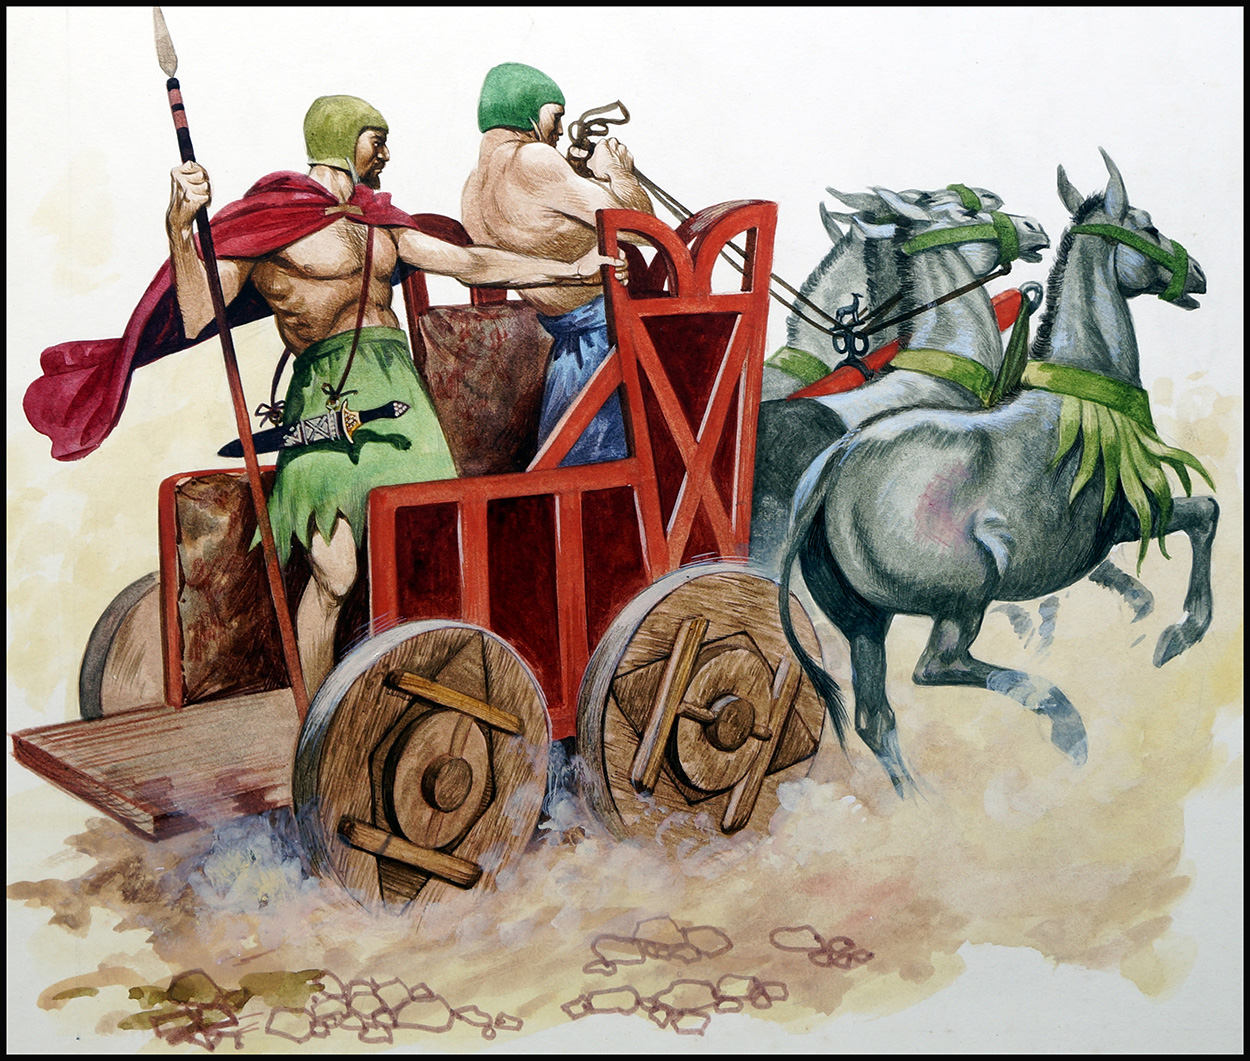 Sumerian Chariot (Original) art by Peter Jackson at The Illustration Art Gallery